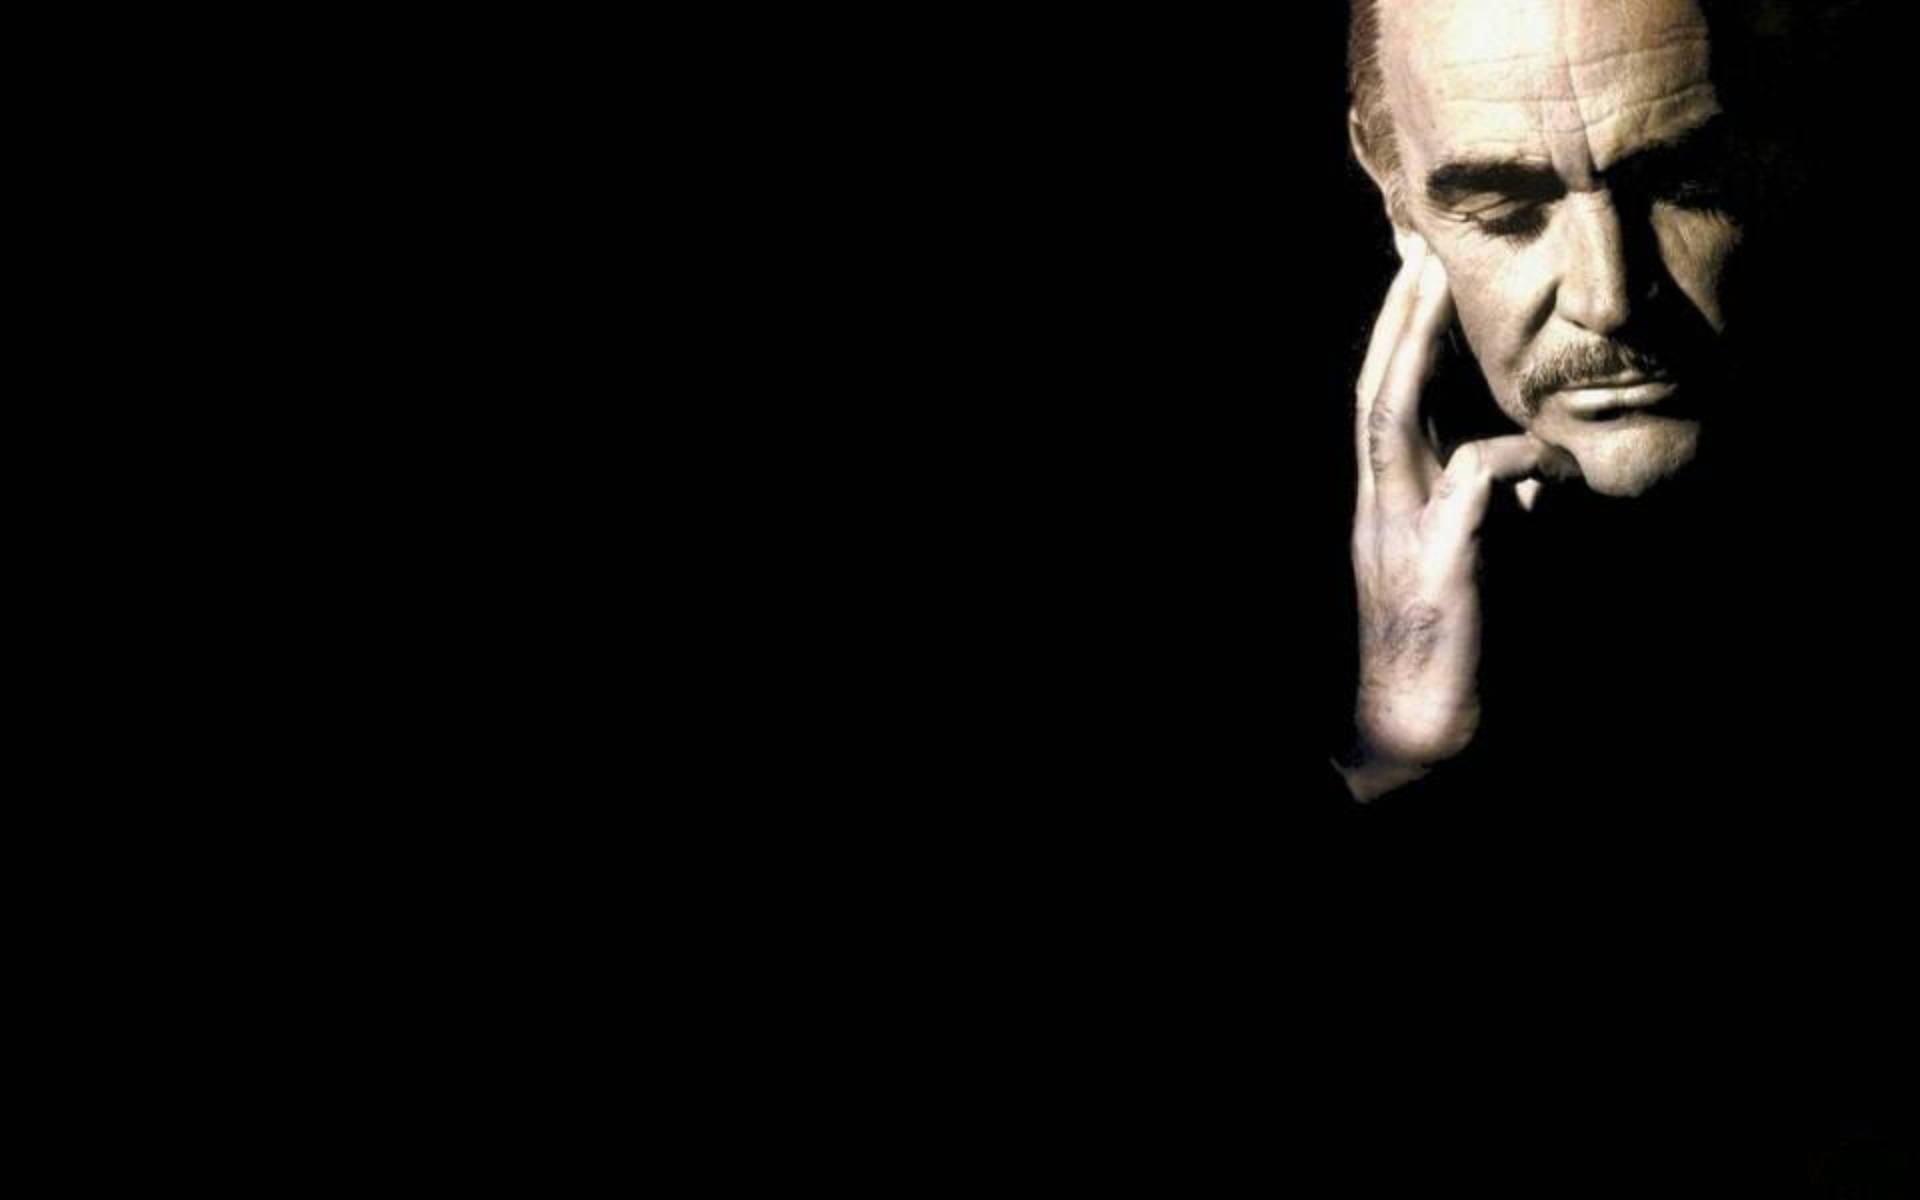 Contemplative Actor Sean Connery Background